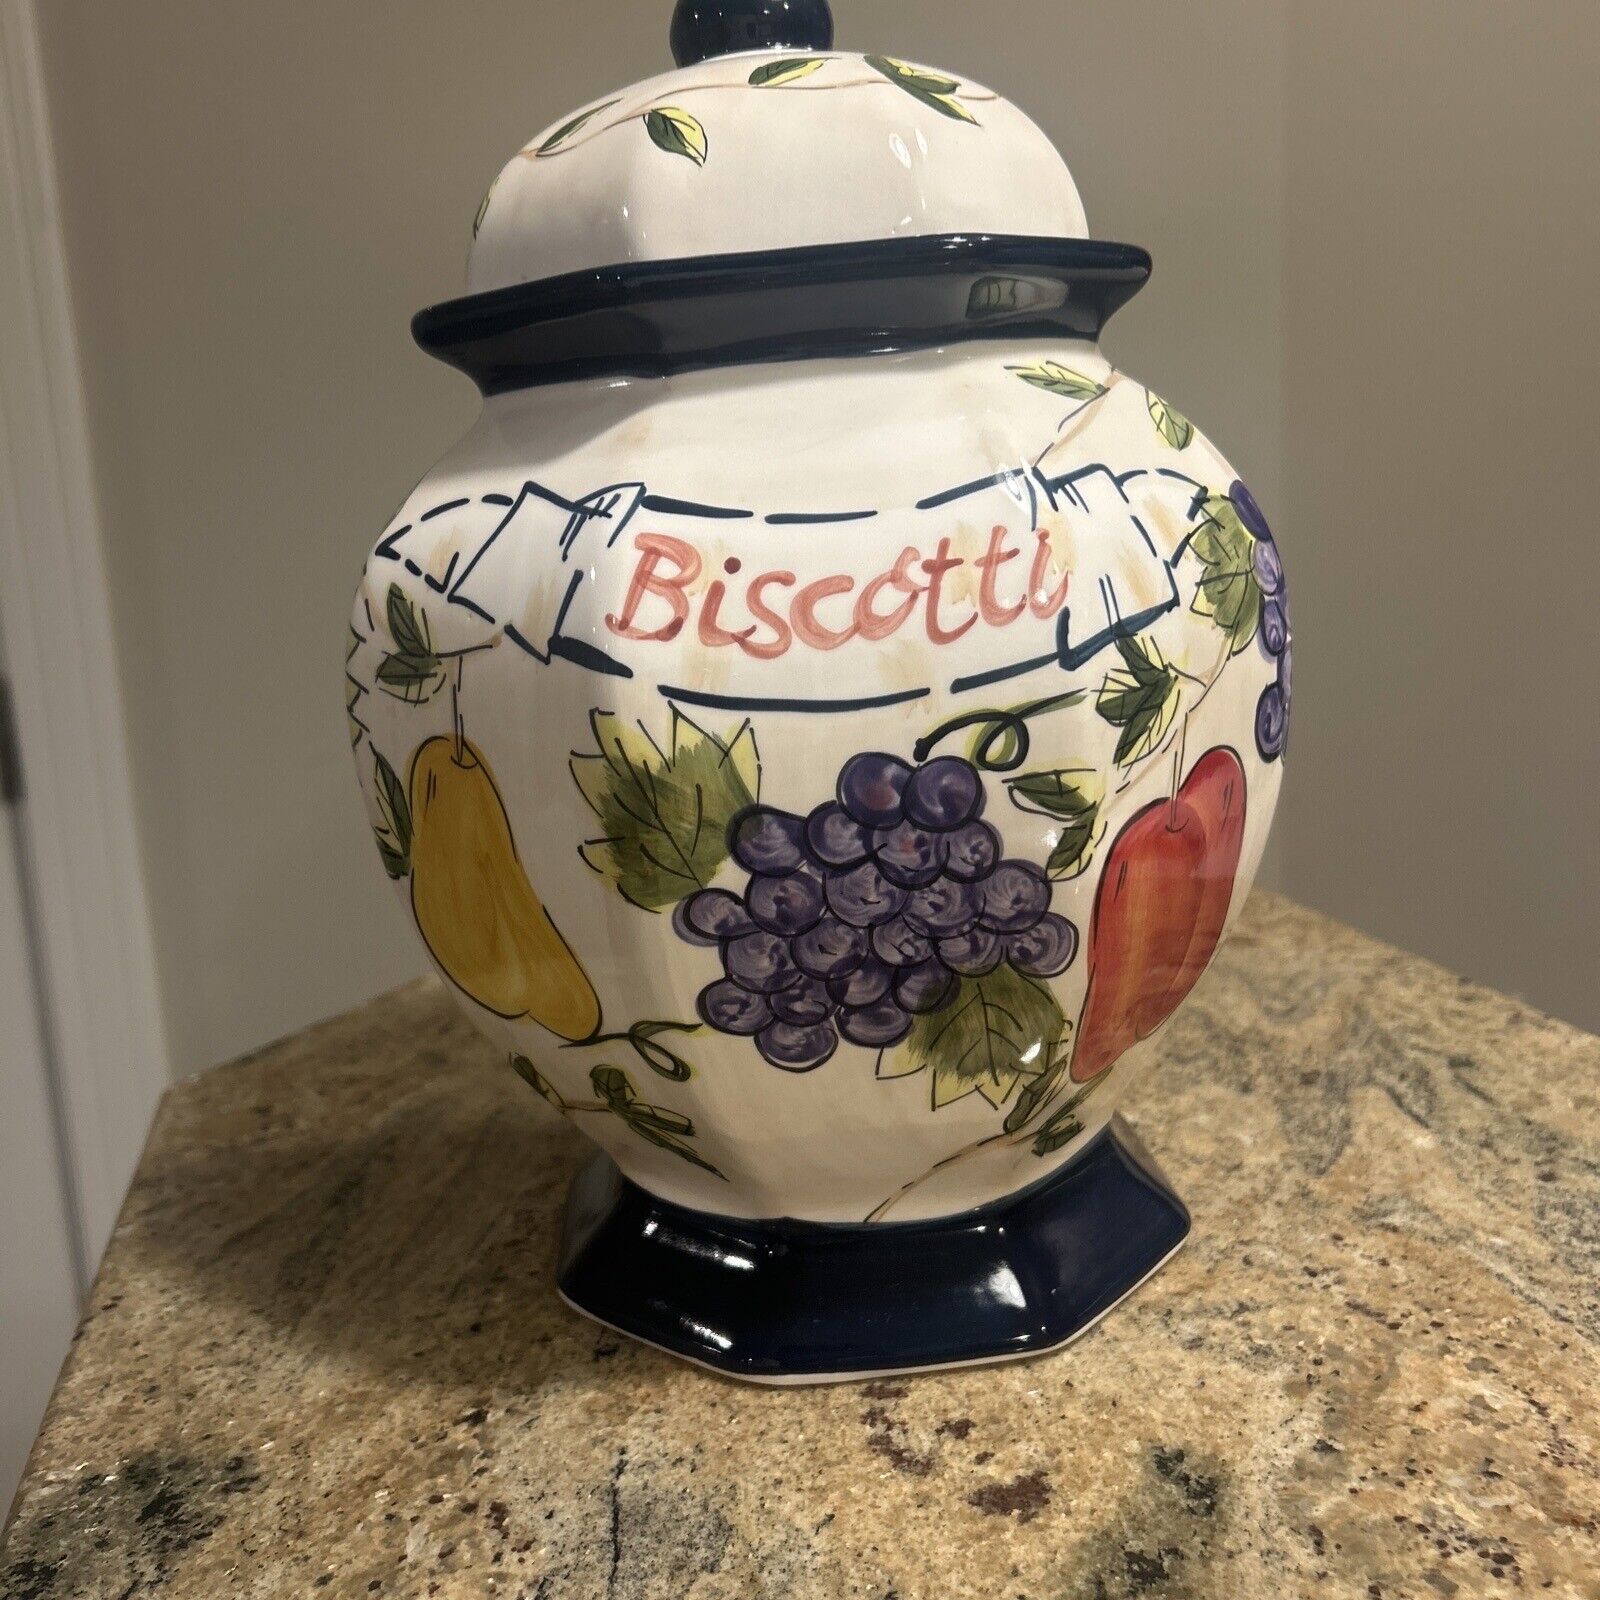 Nonni's Biscotti Hand Painted Ceramic Cookie Jar Colorful Fruit Design 